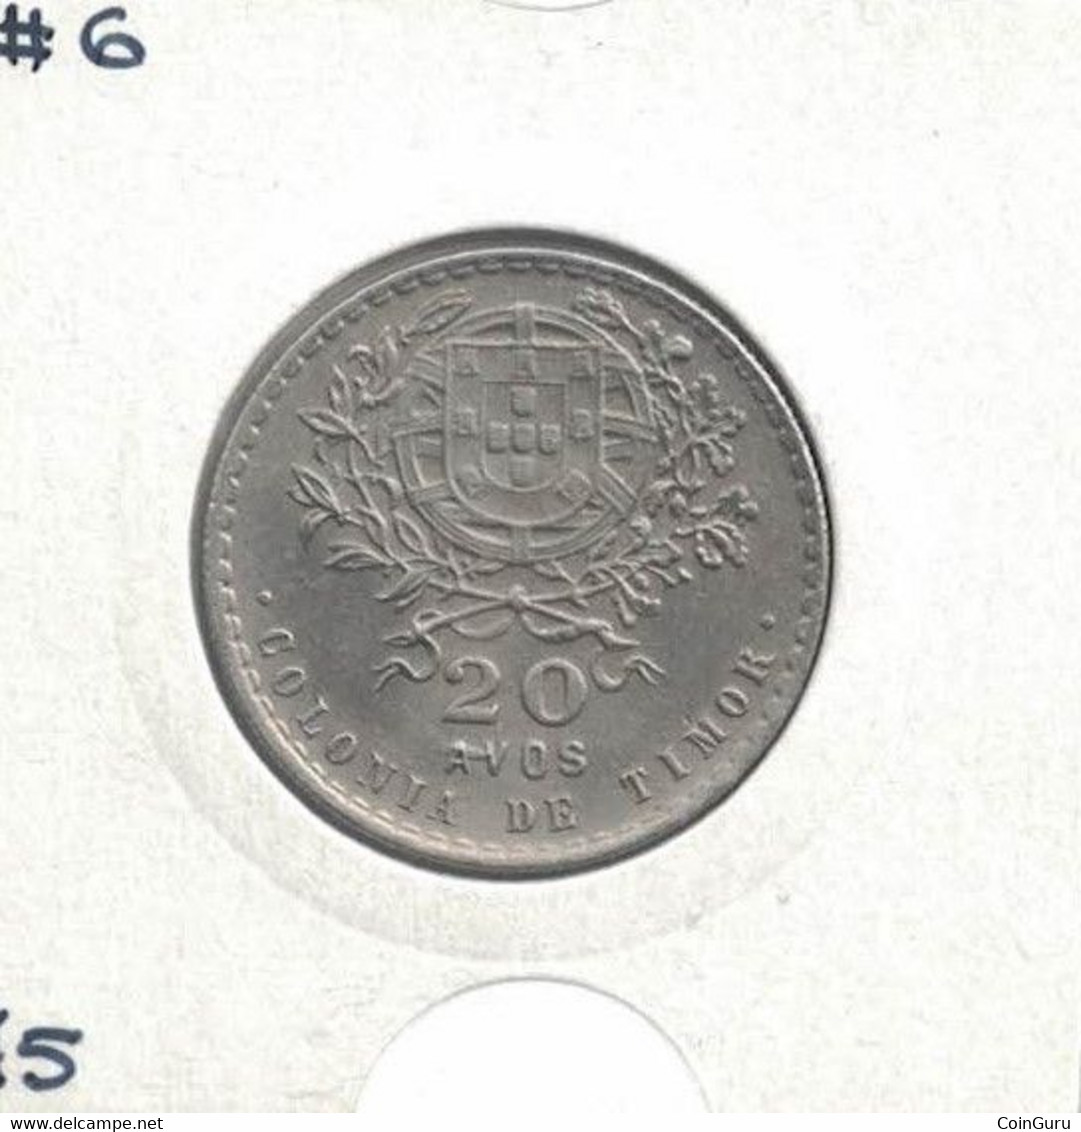 Timor 20 Avos 1945, High Grade, 50K Mintage, Scarce, KM#6 - Timor